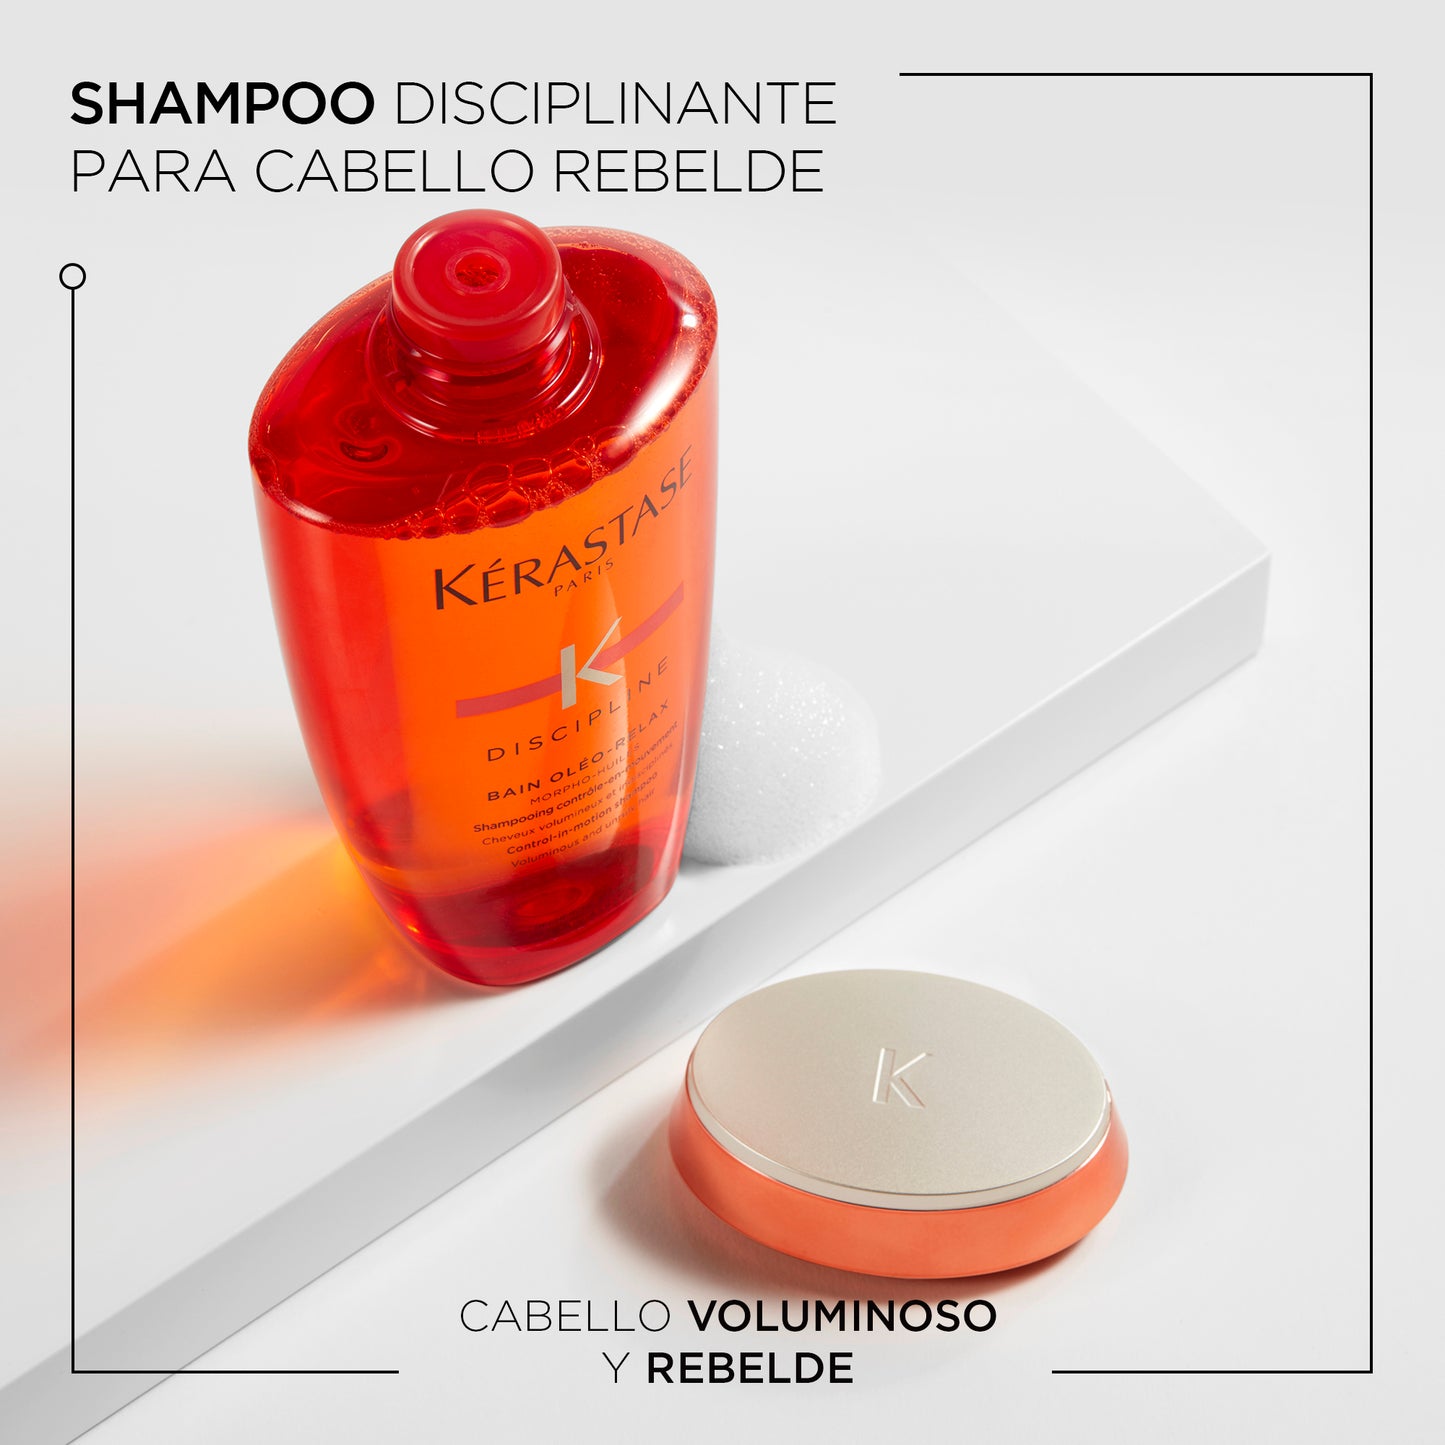 Shampoo Discipline Óleo Relax para cabello rebelde con frizz 250 ml